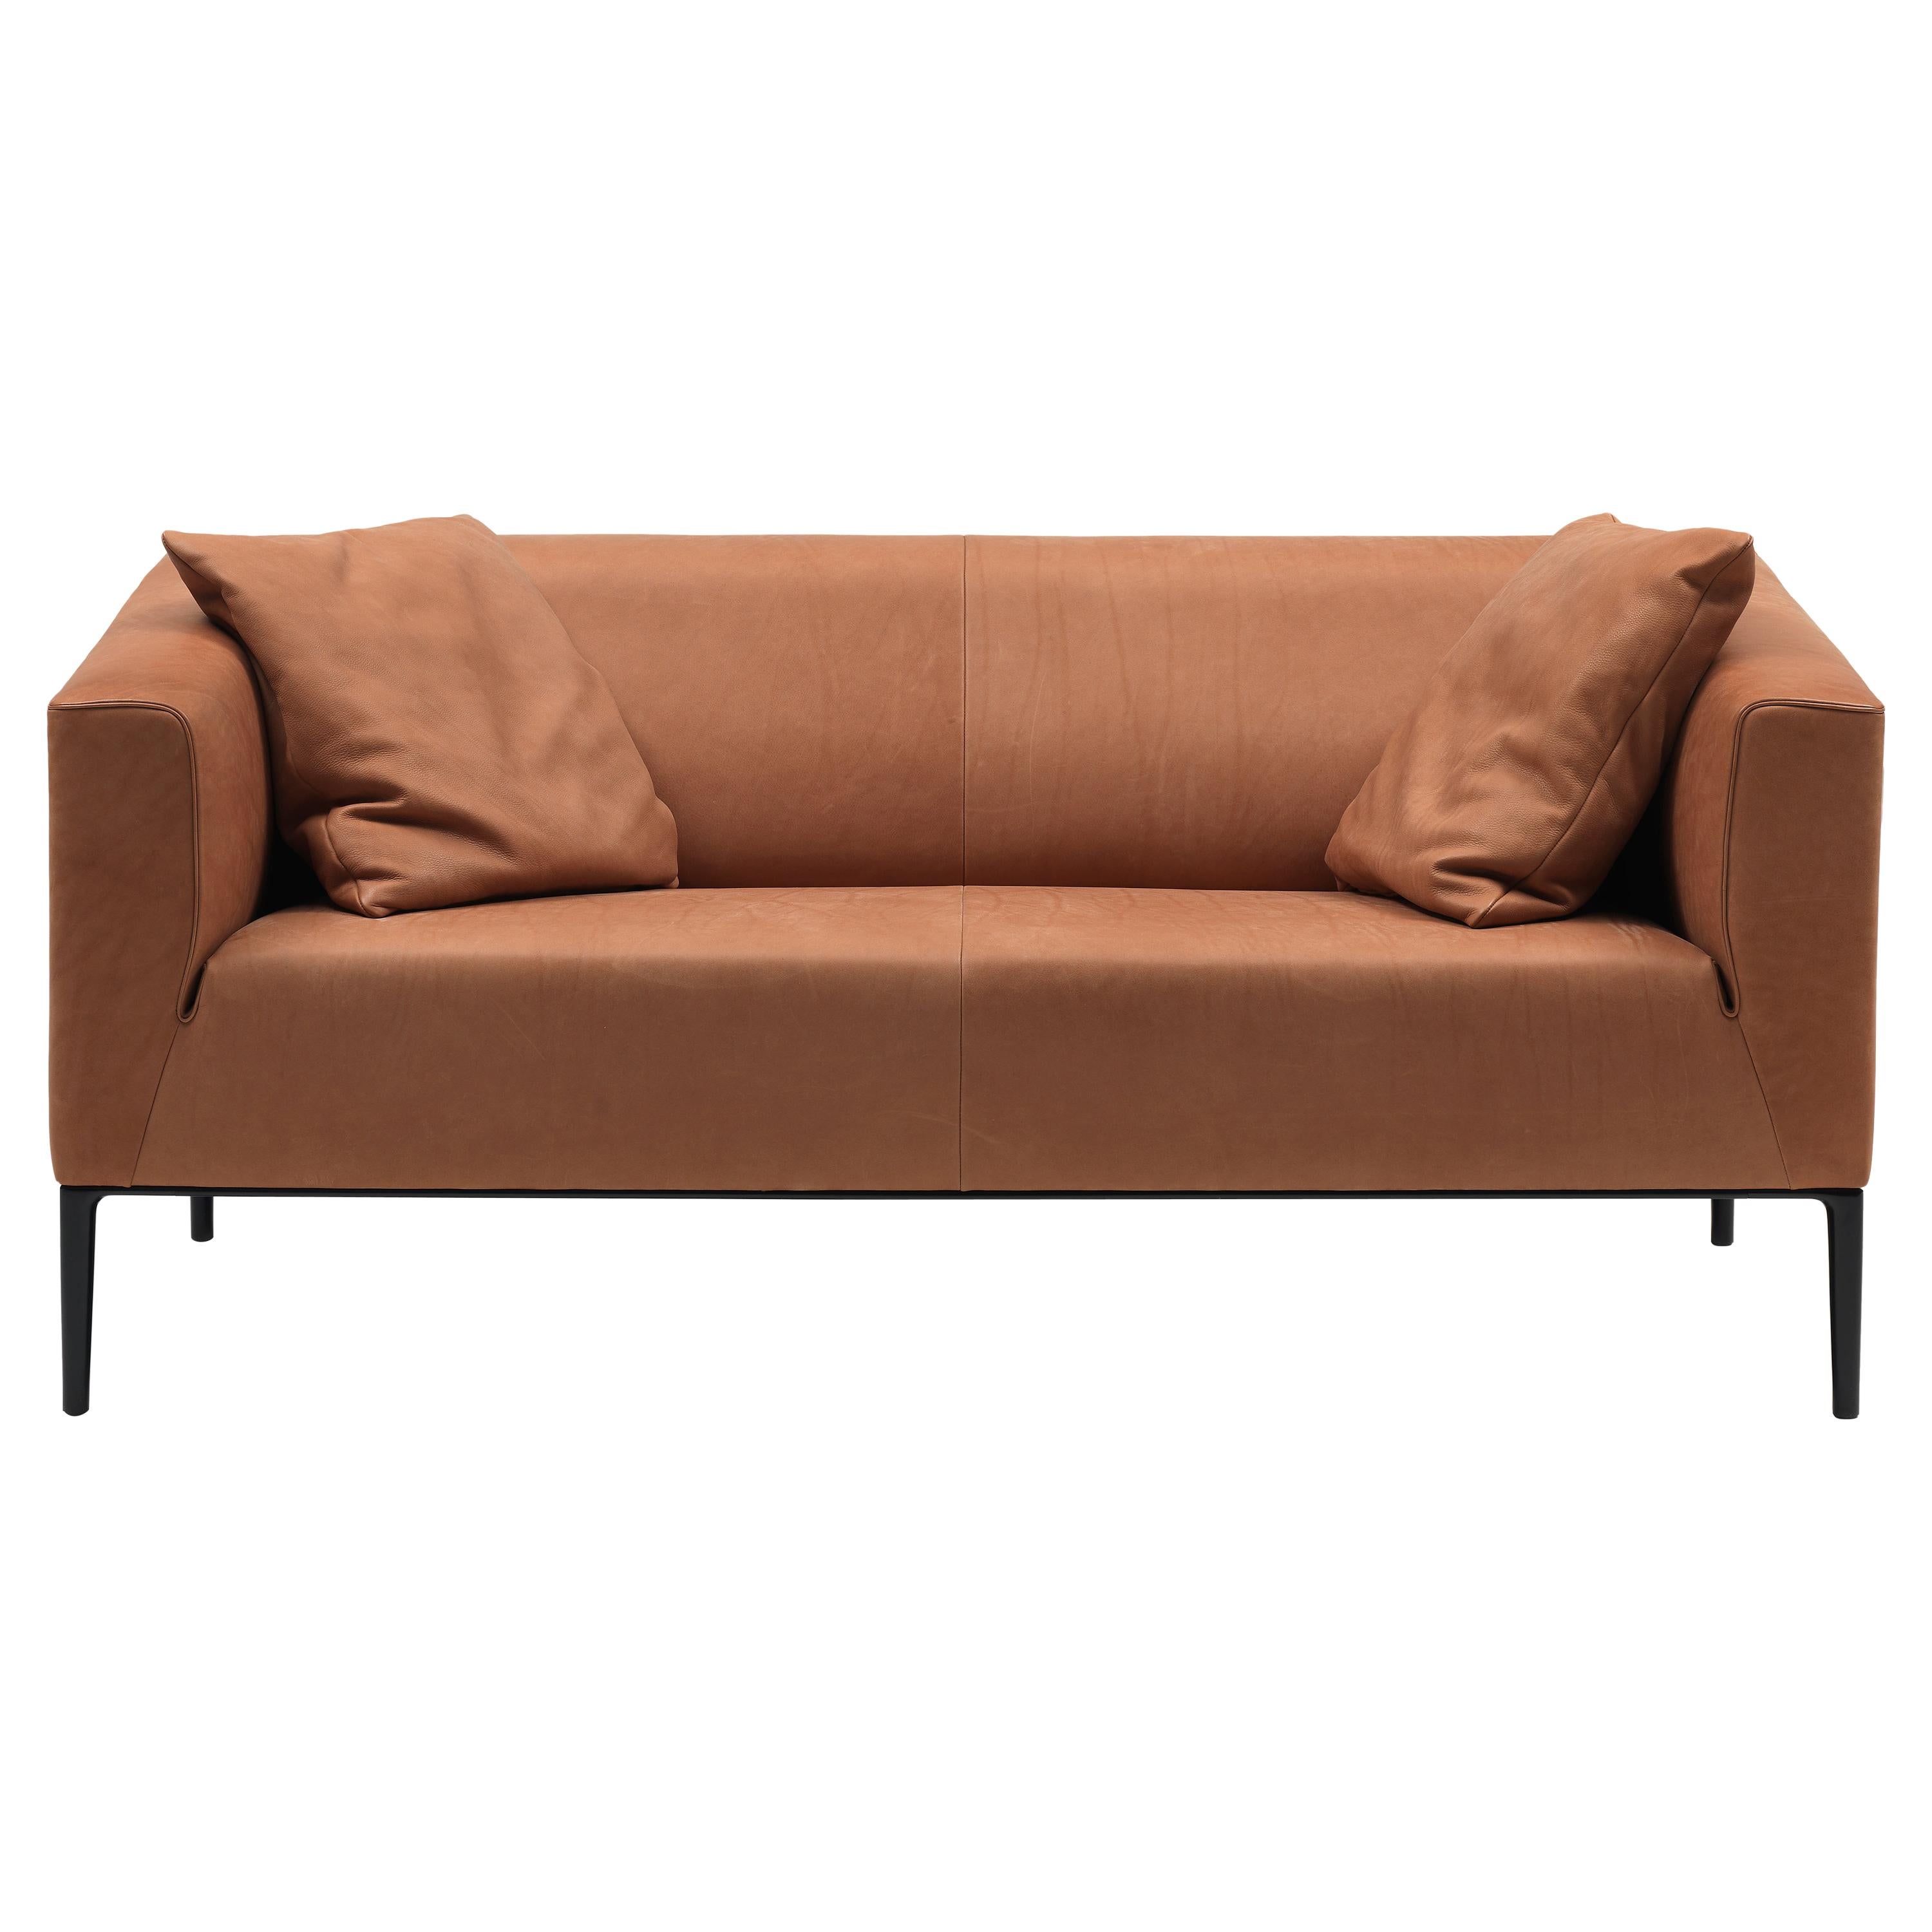 DS-161 Sofa by De Sede